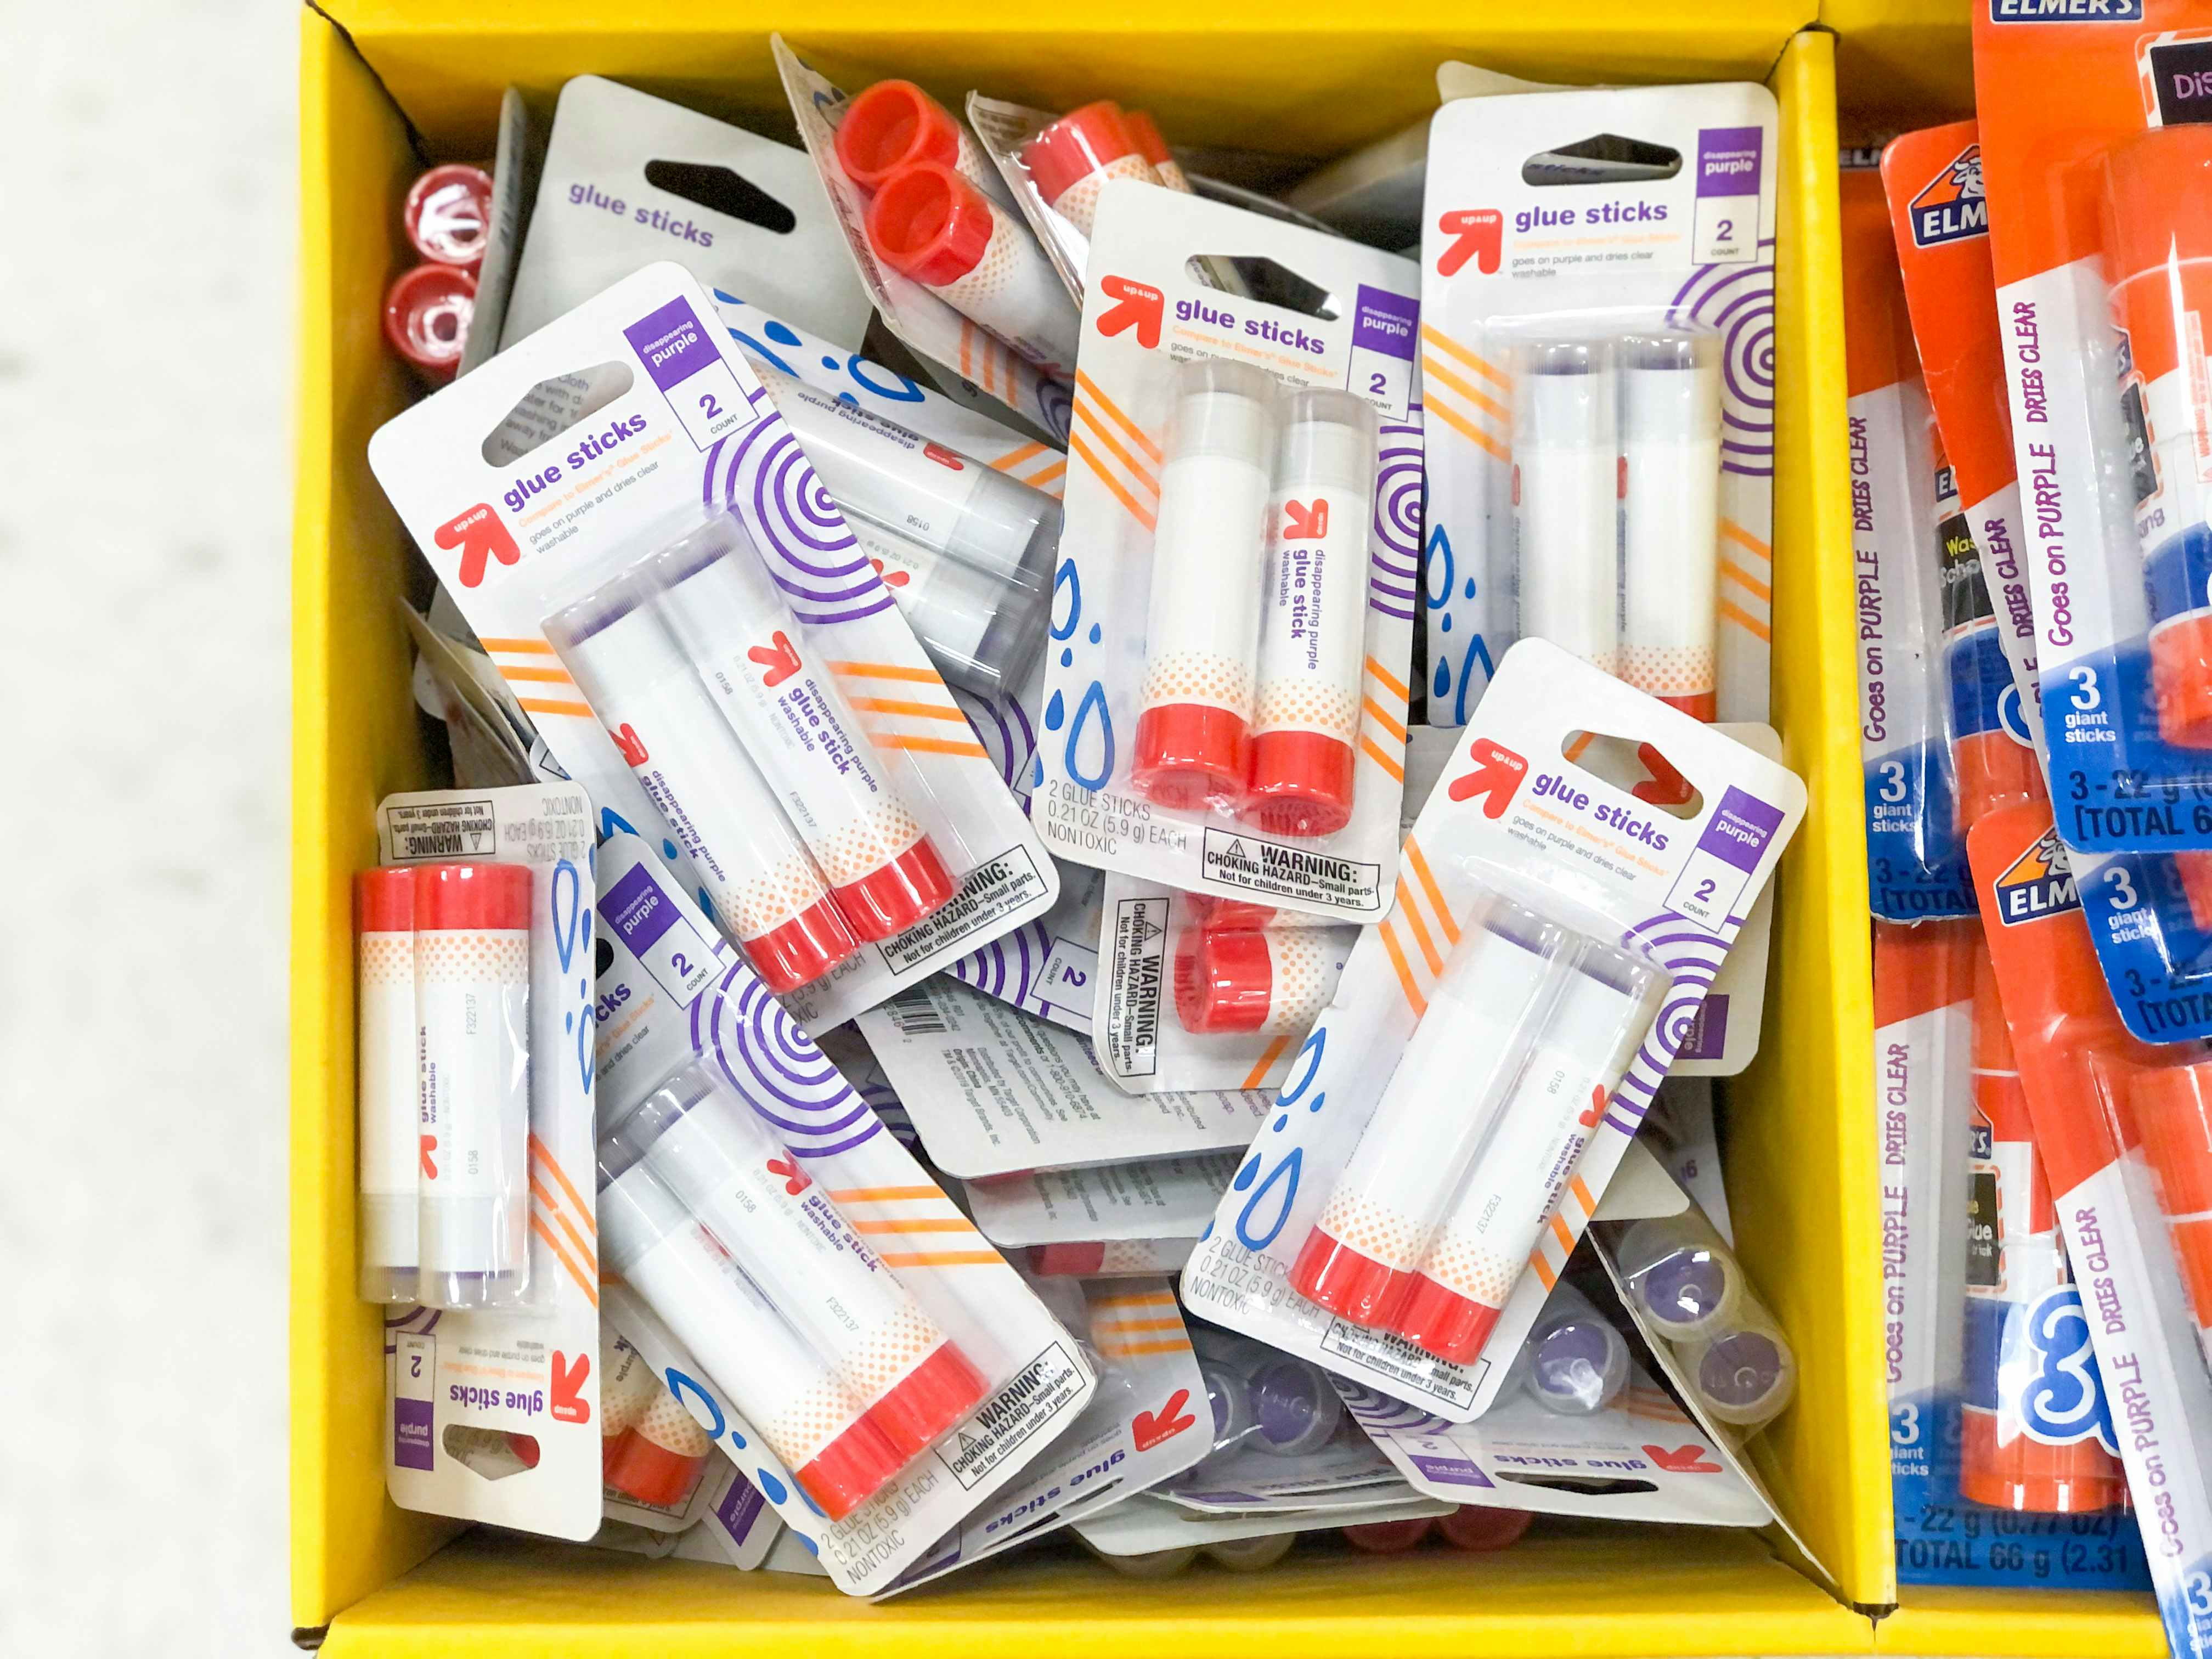 bin of packages of glue sticks at Target